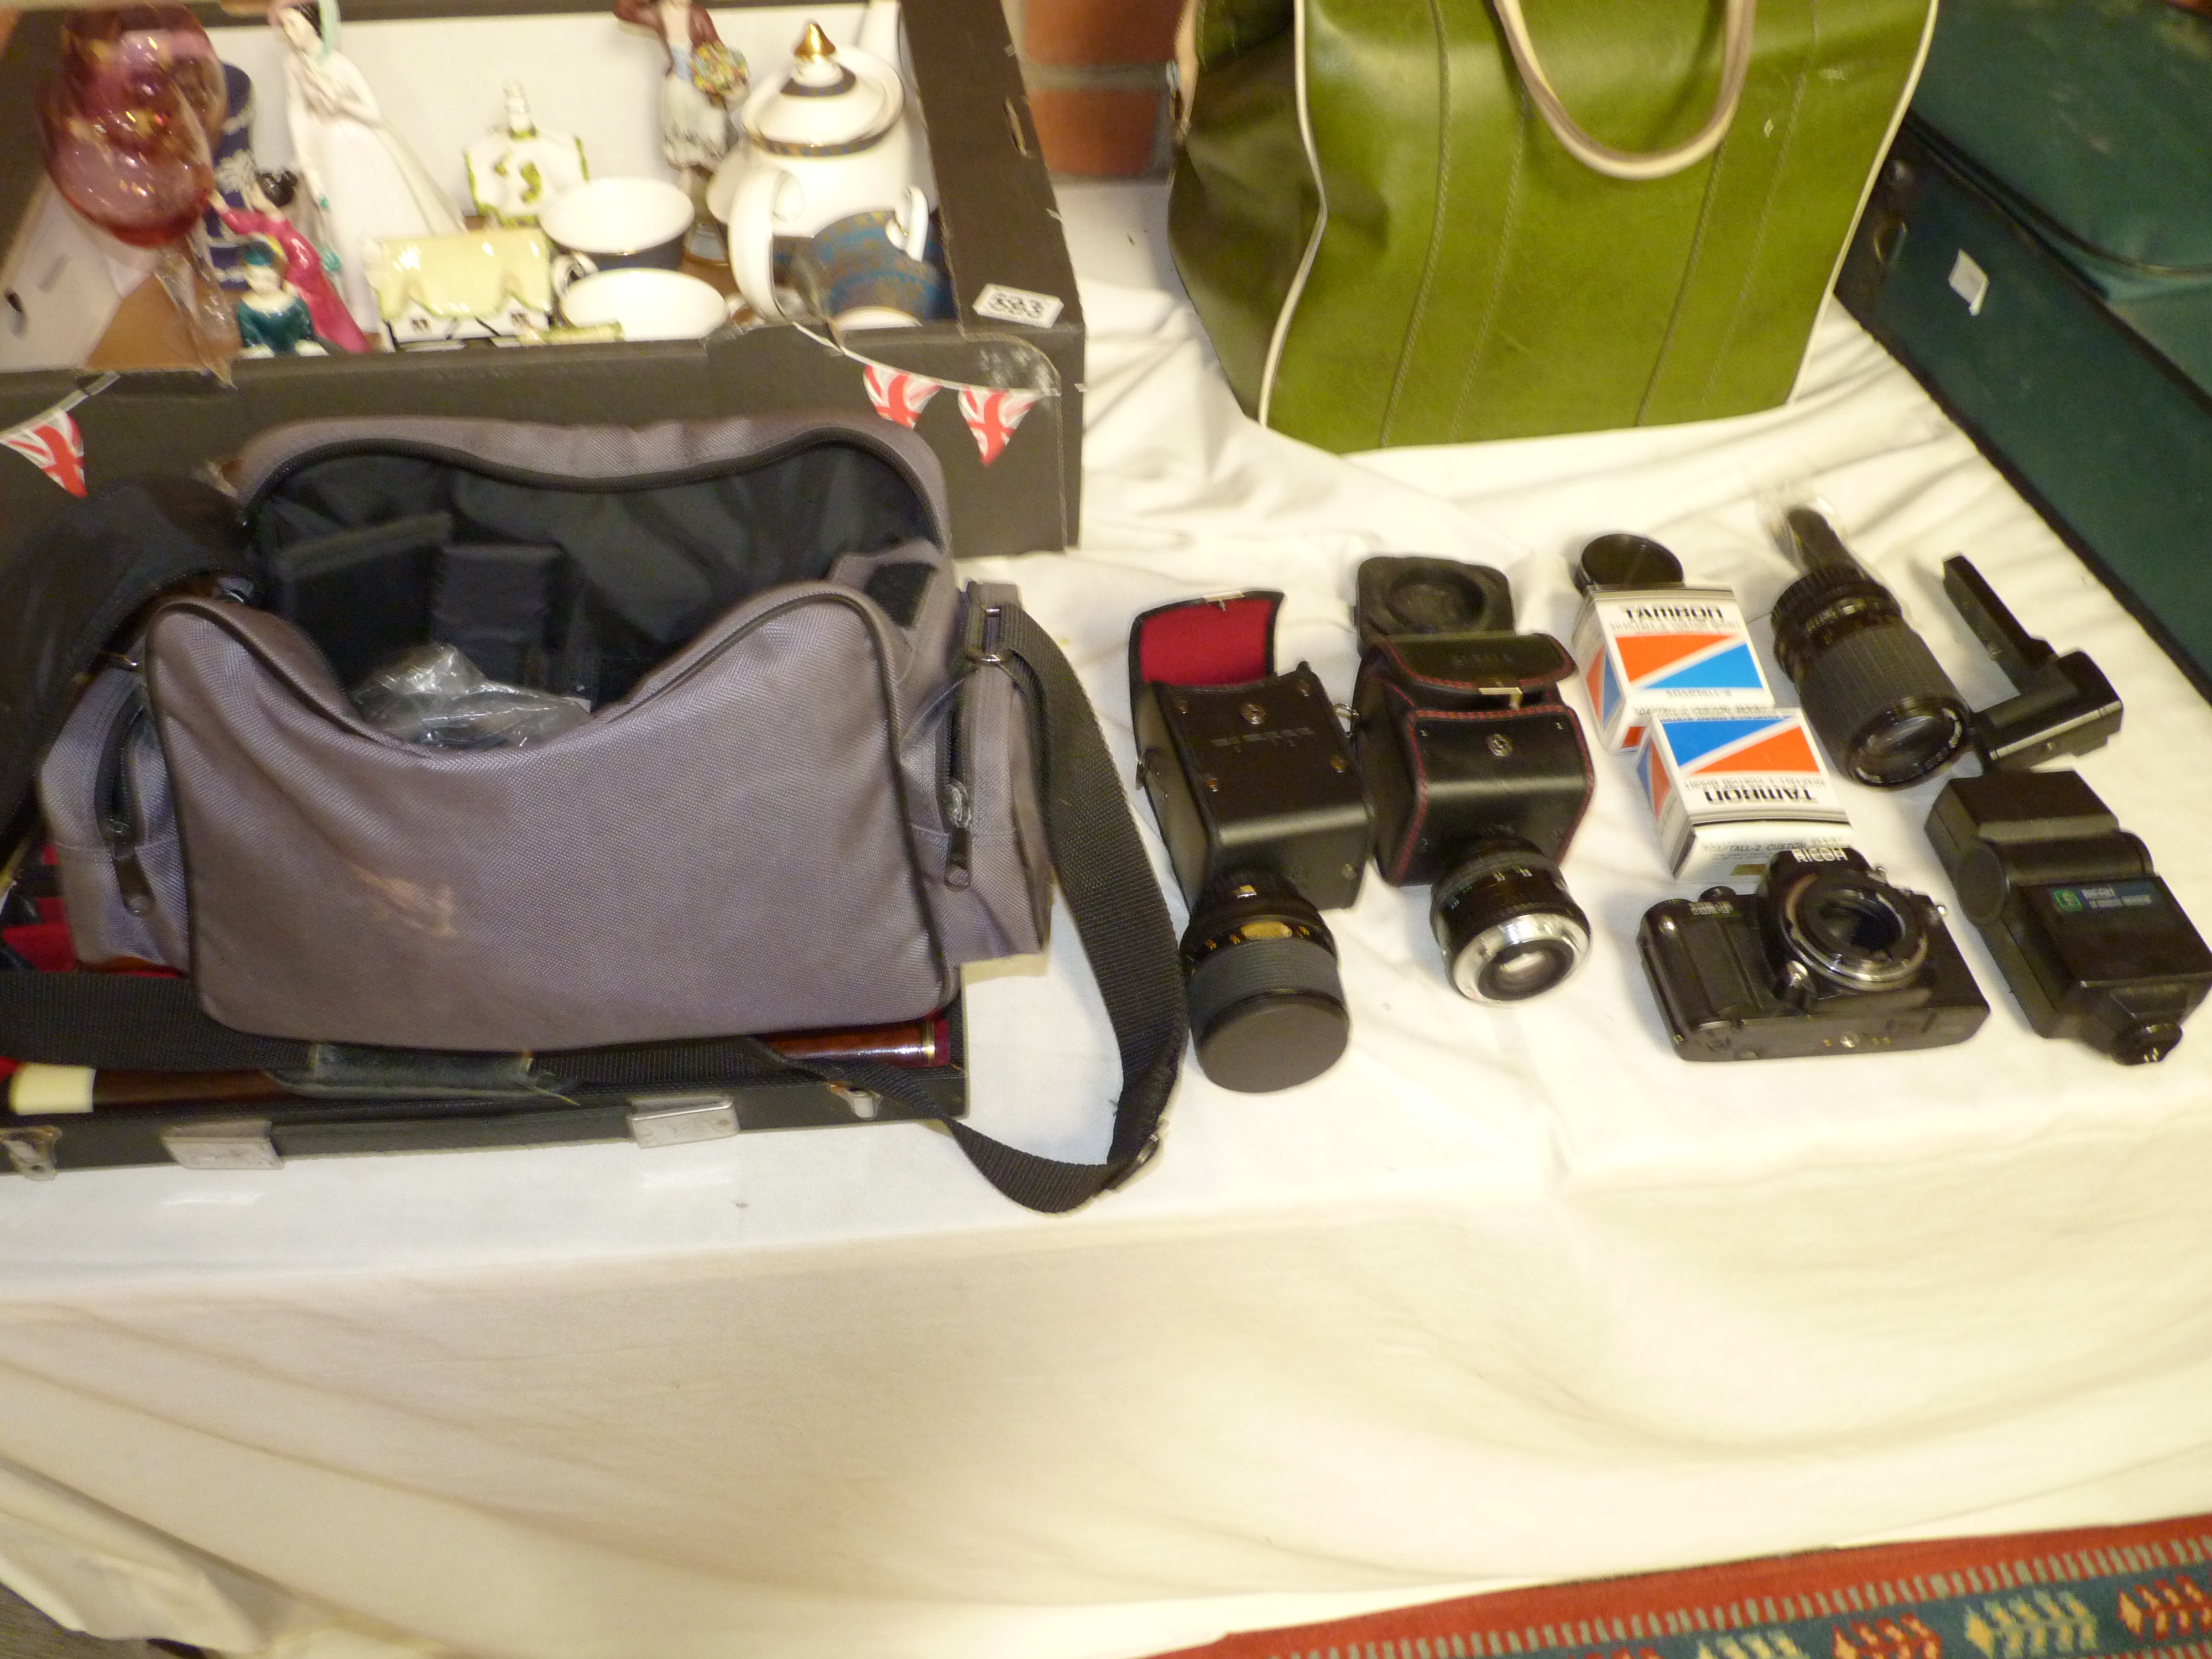 Cameras and equipment